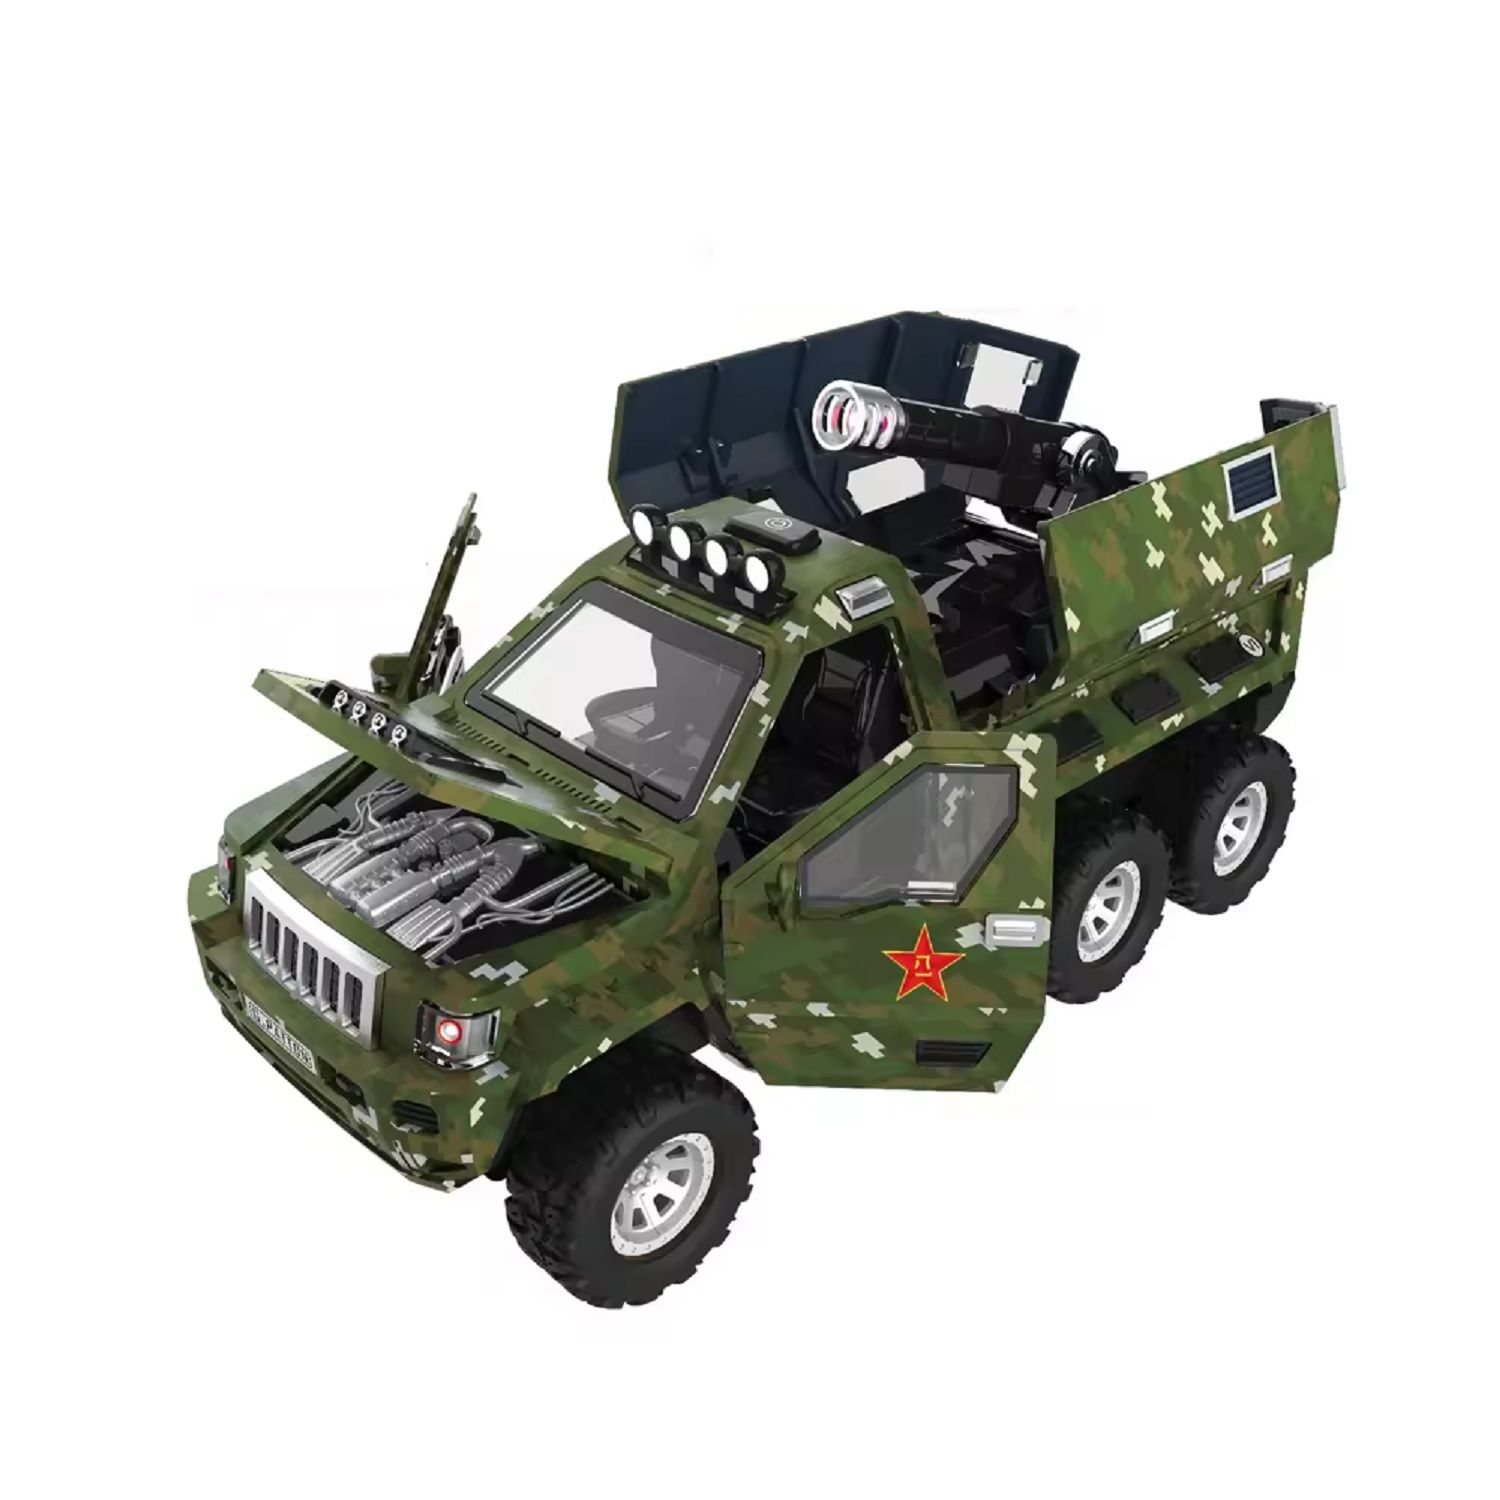 KTRS ENTERPRISE Diecast Model Car Toy Vehicles 1/24 Scale Armor Cannon Die Cast Miniature Car Model Toy For Boys